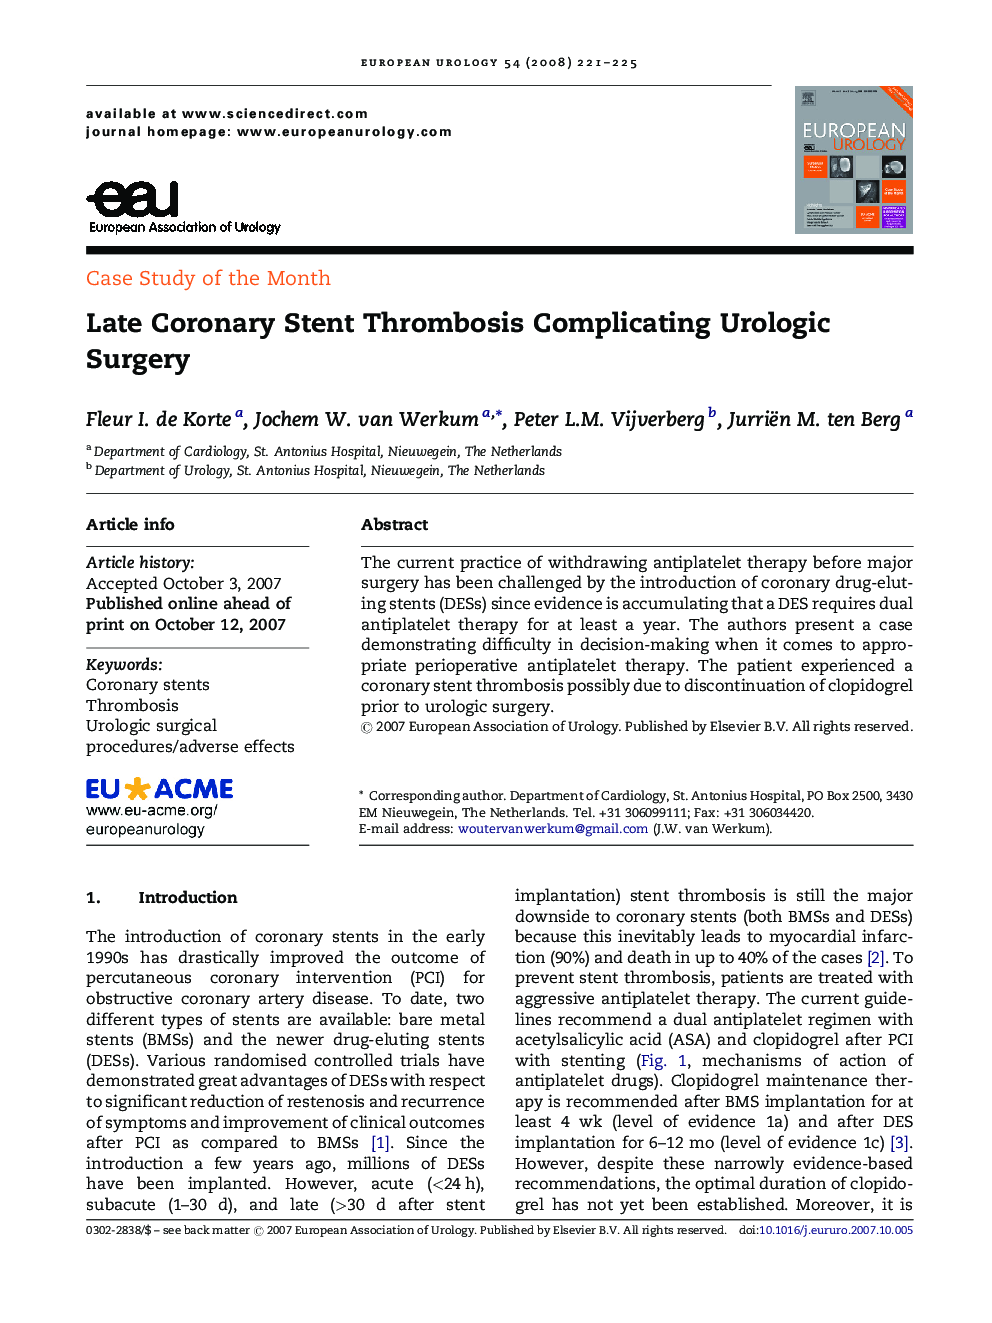 Late Coronary Stent Thrombosis Complicating Urologic Surgery